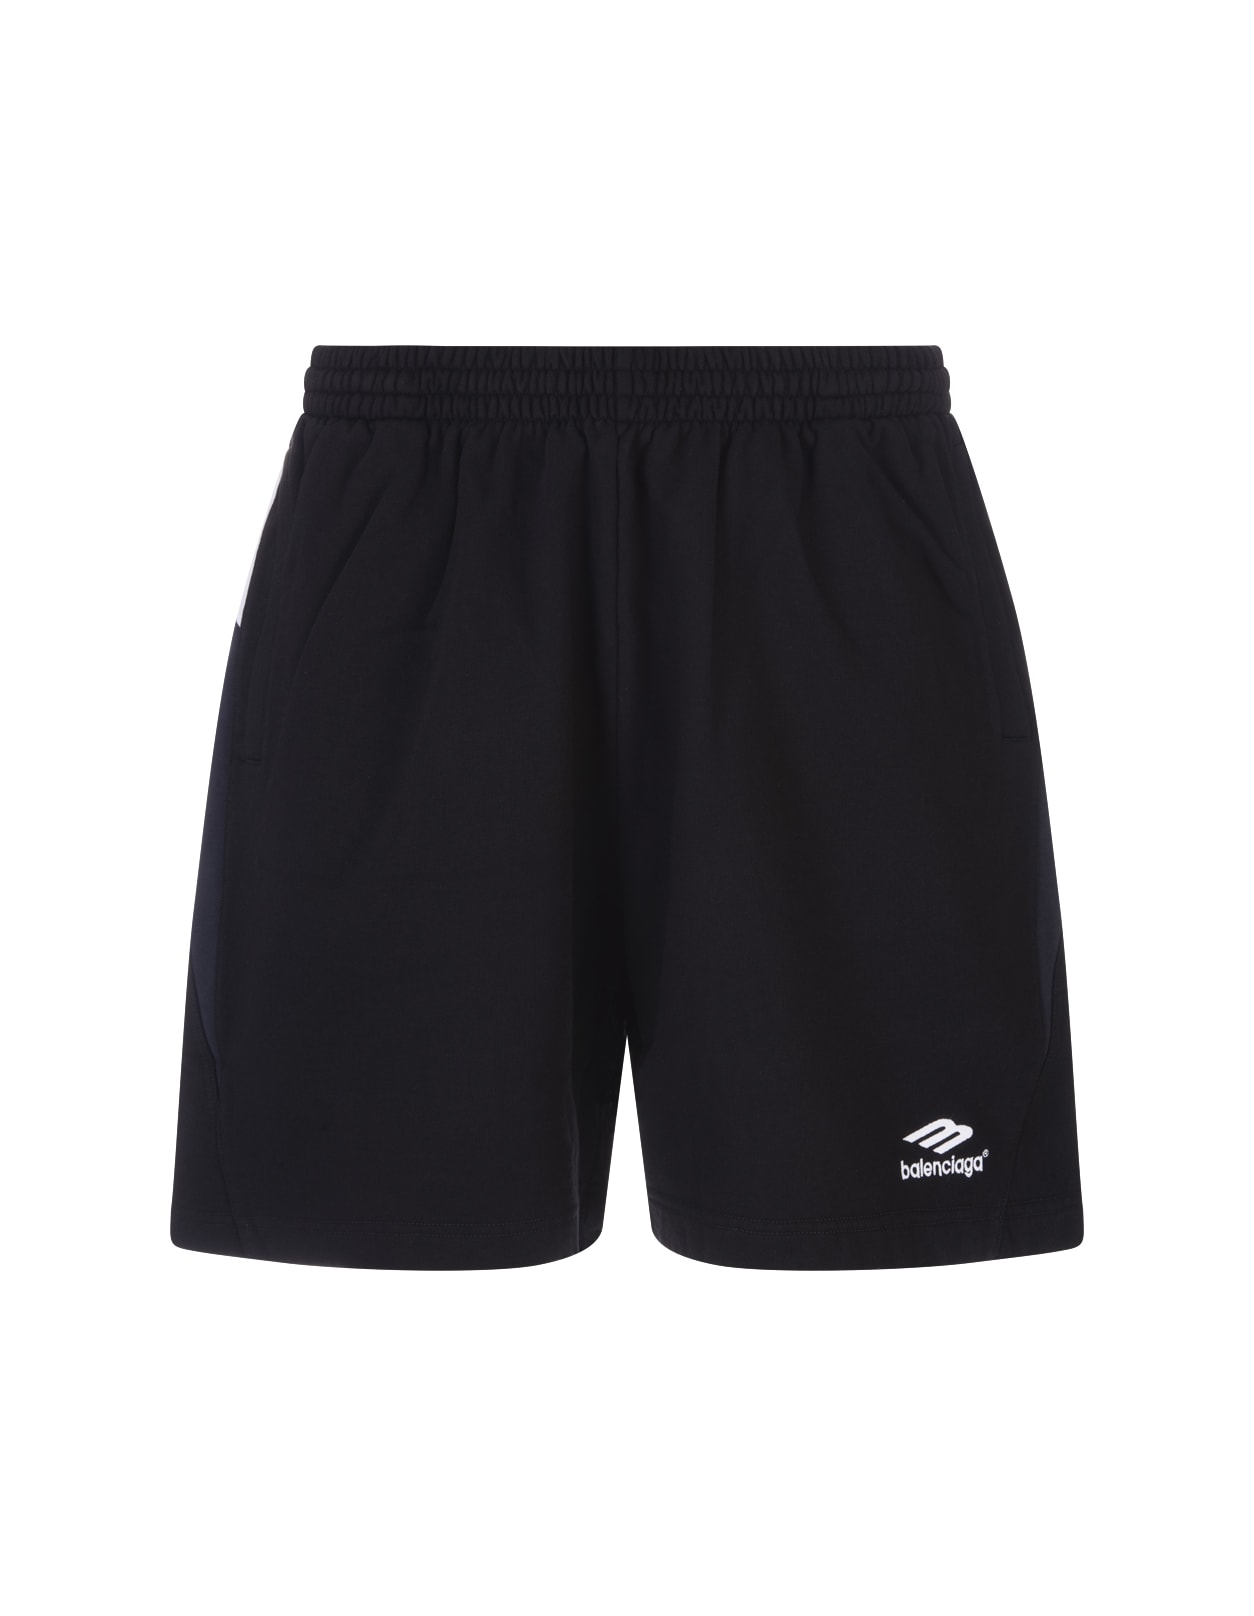 Balenciaga Man Black Sporty B Shorts